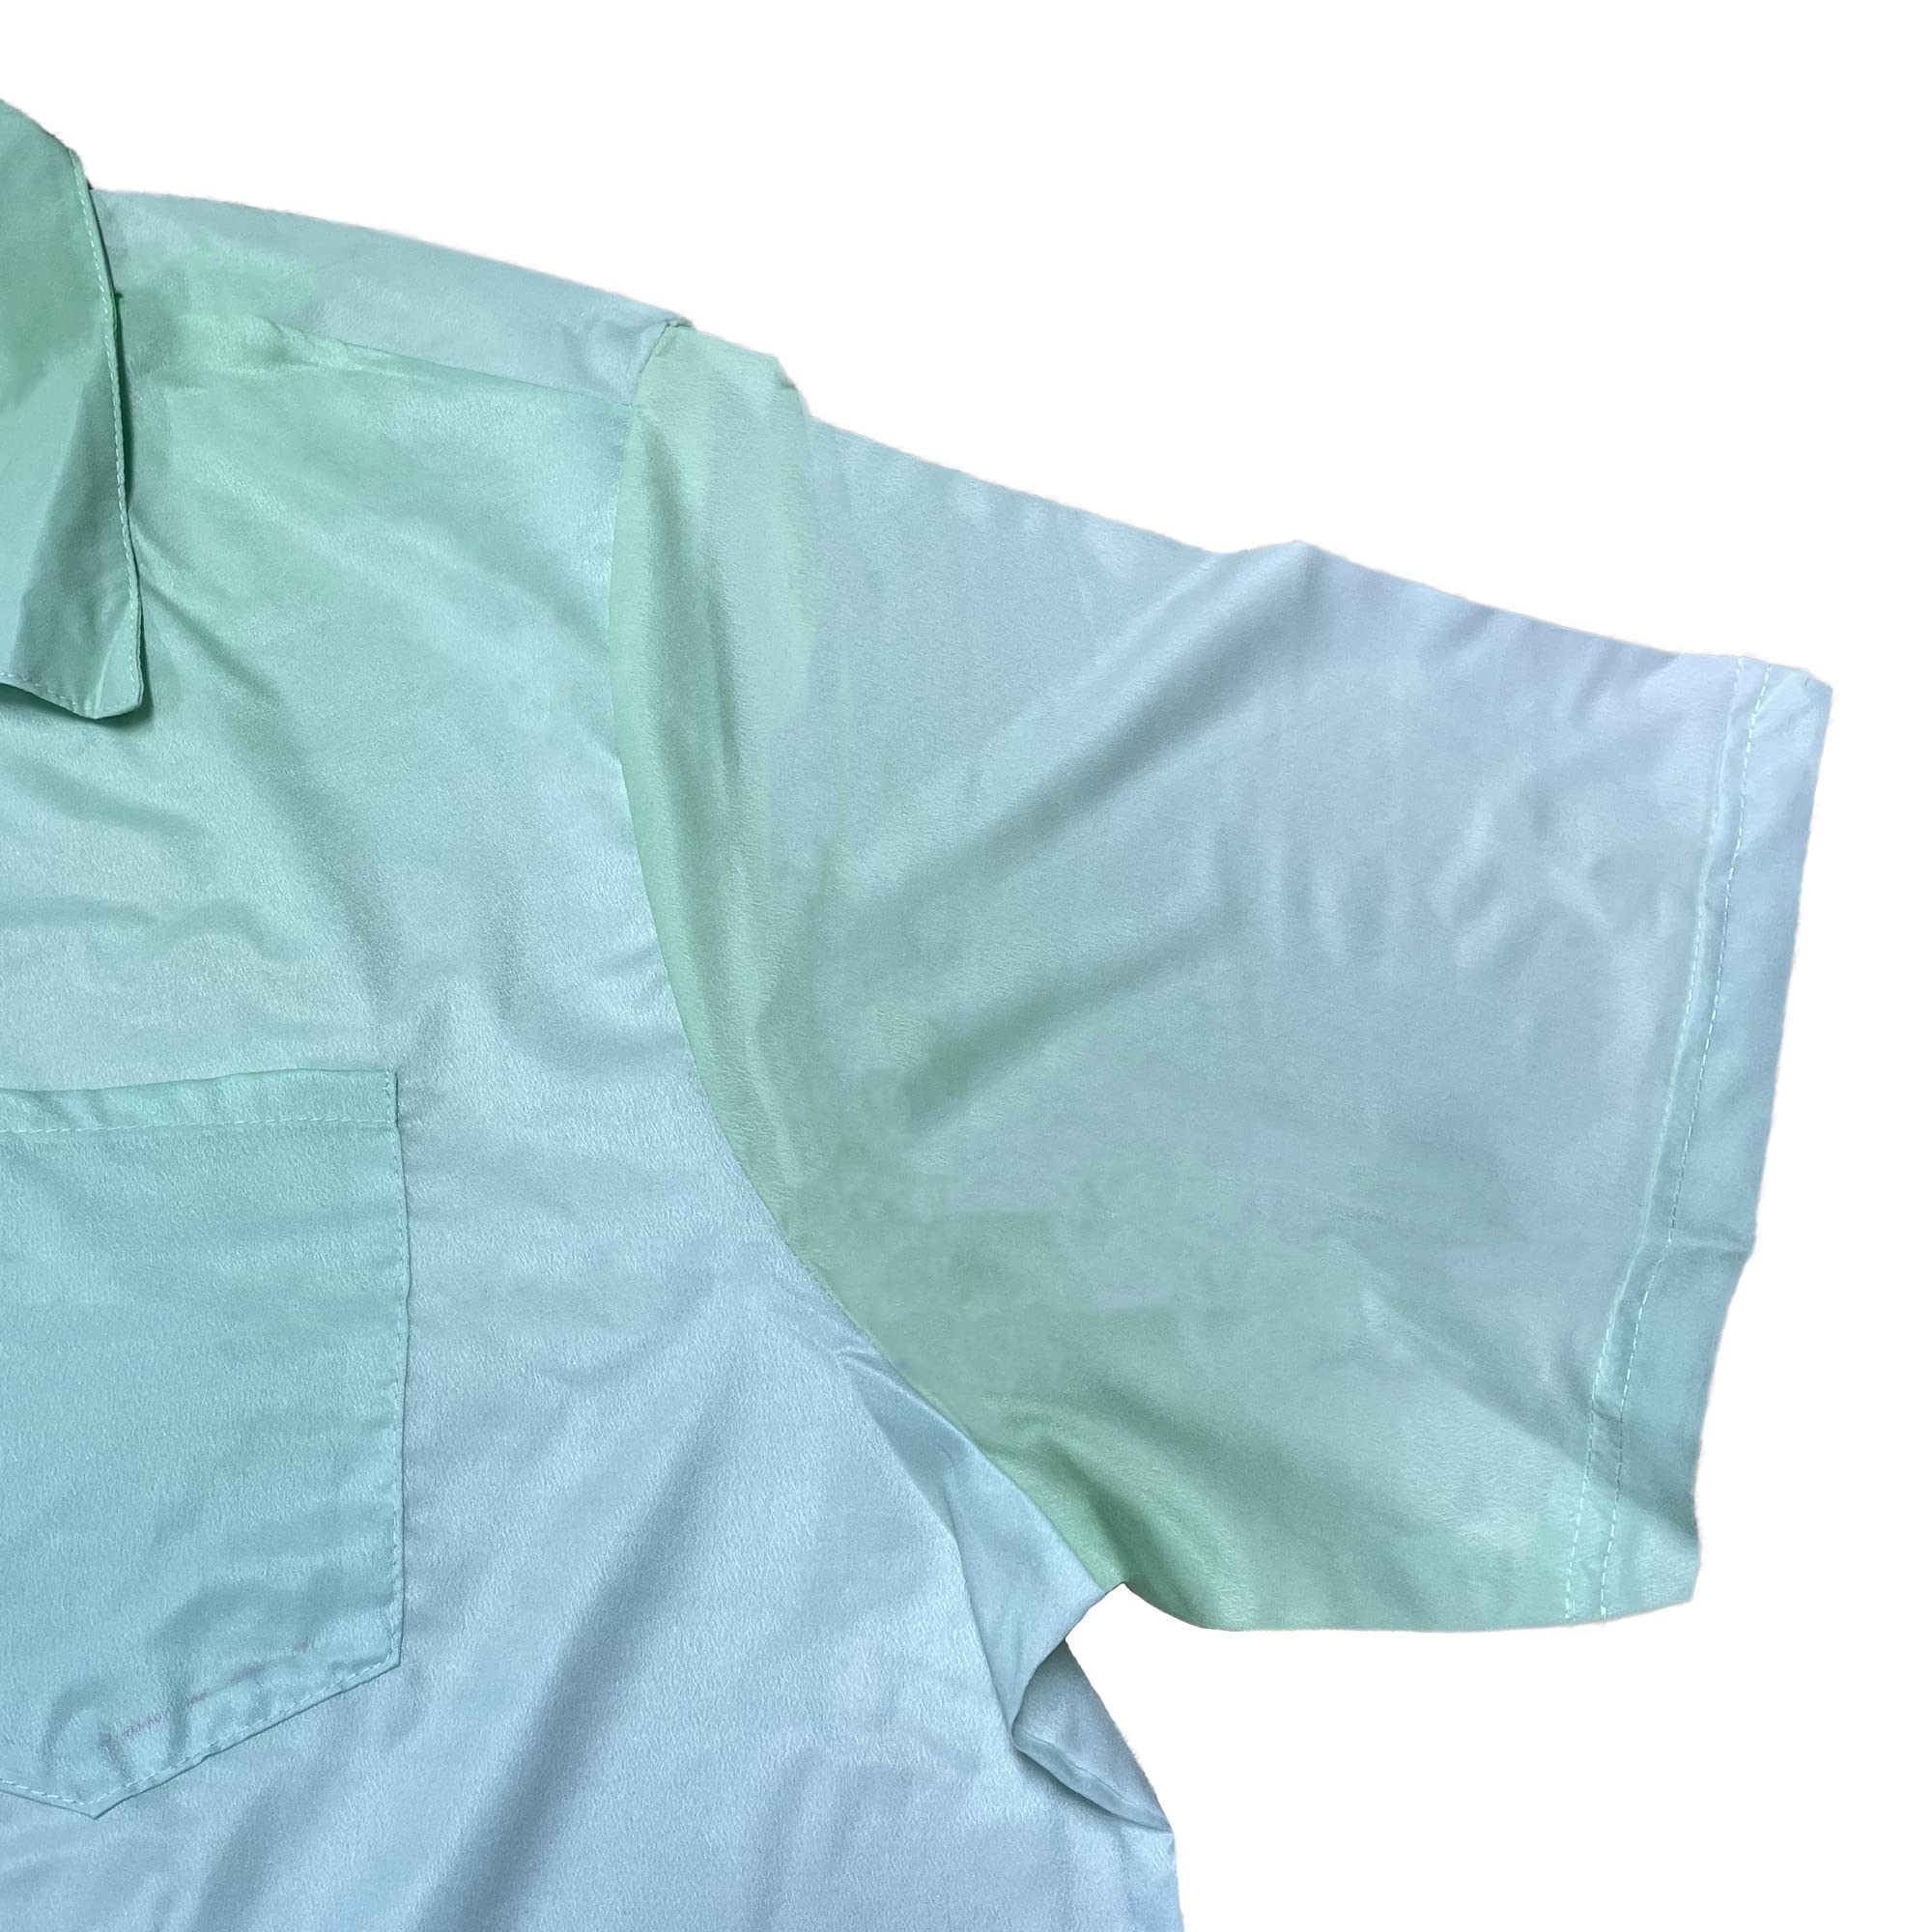 Men's Hawaiian Shirt Casual Button Down Short Sleeves Beach Shirt - Gradient Green Blue